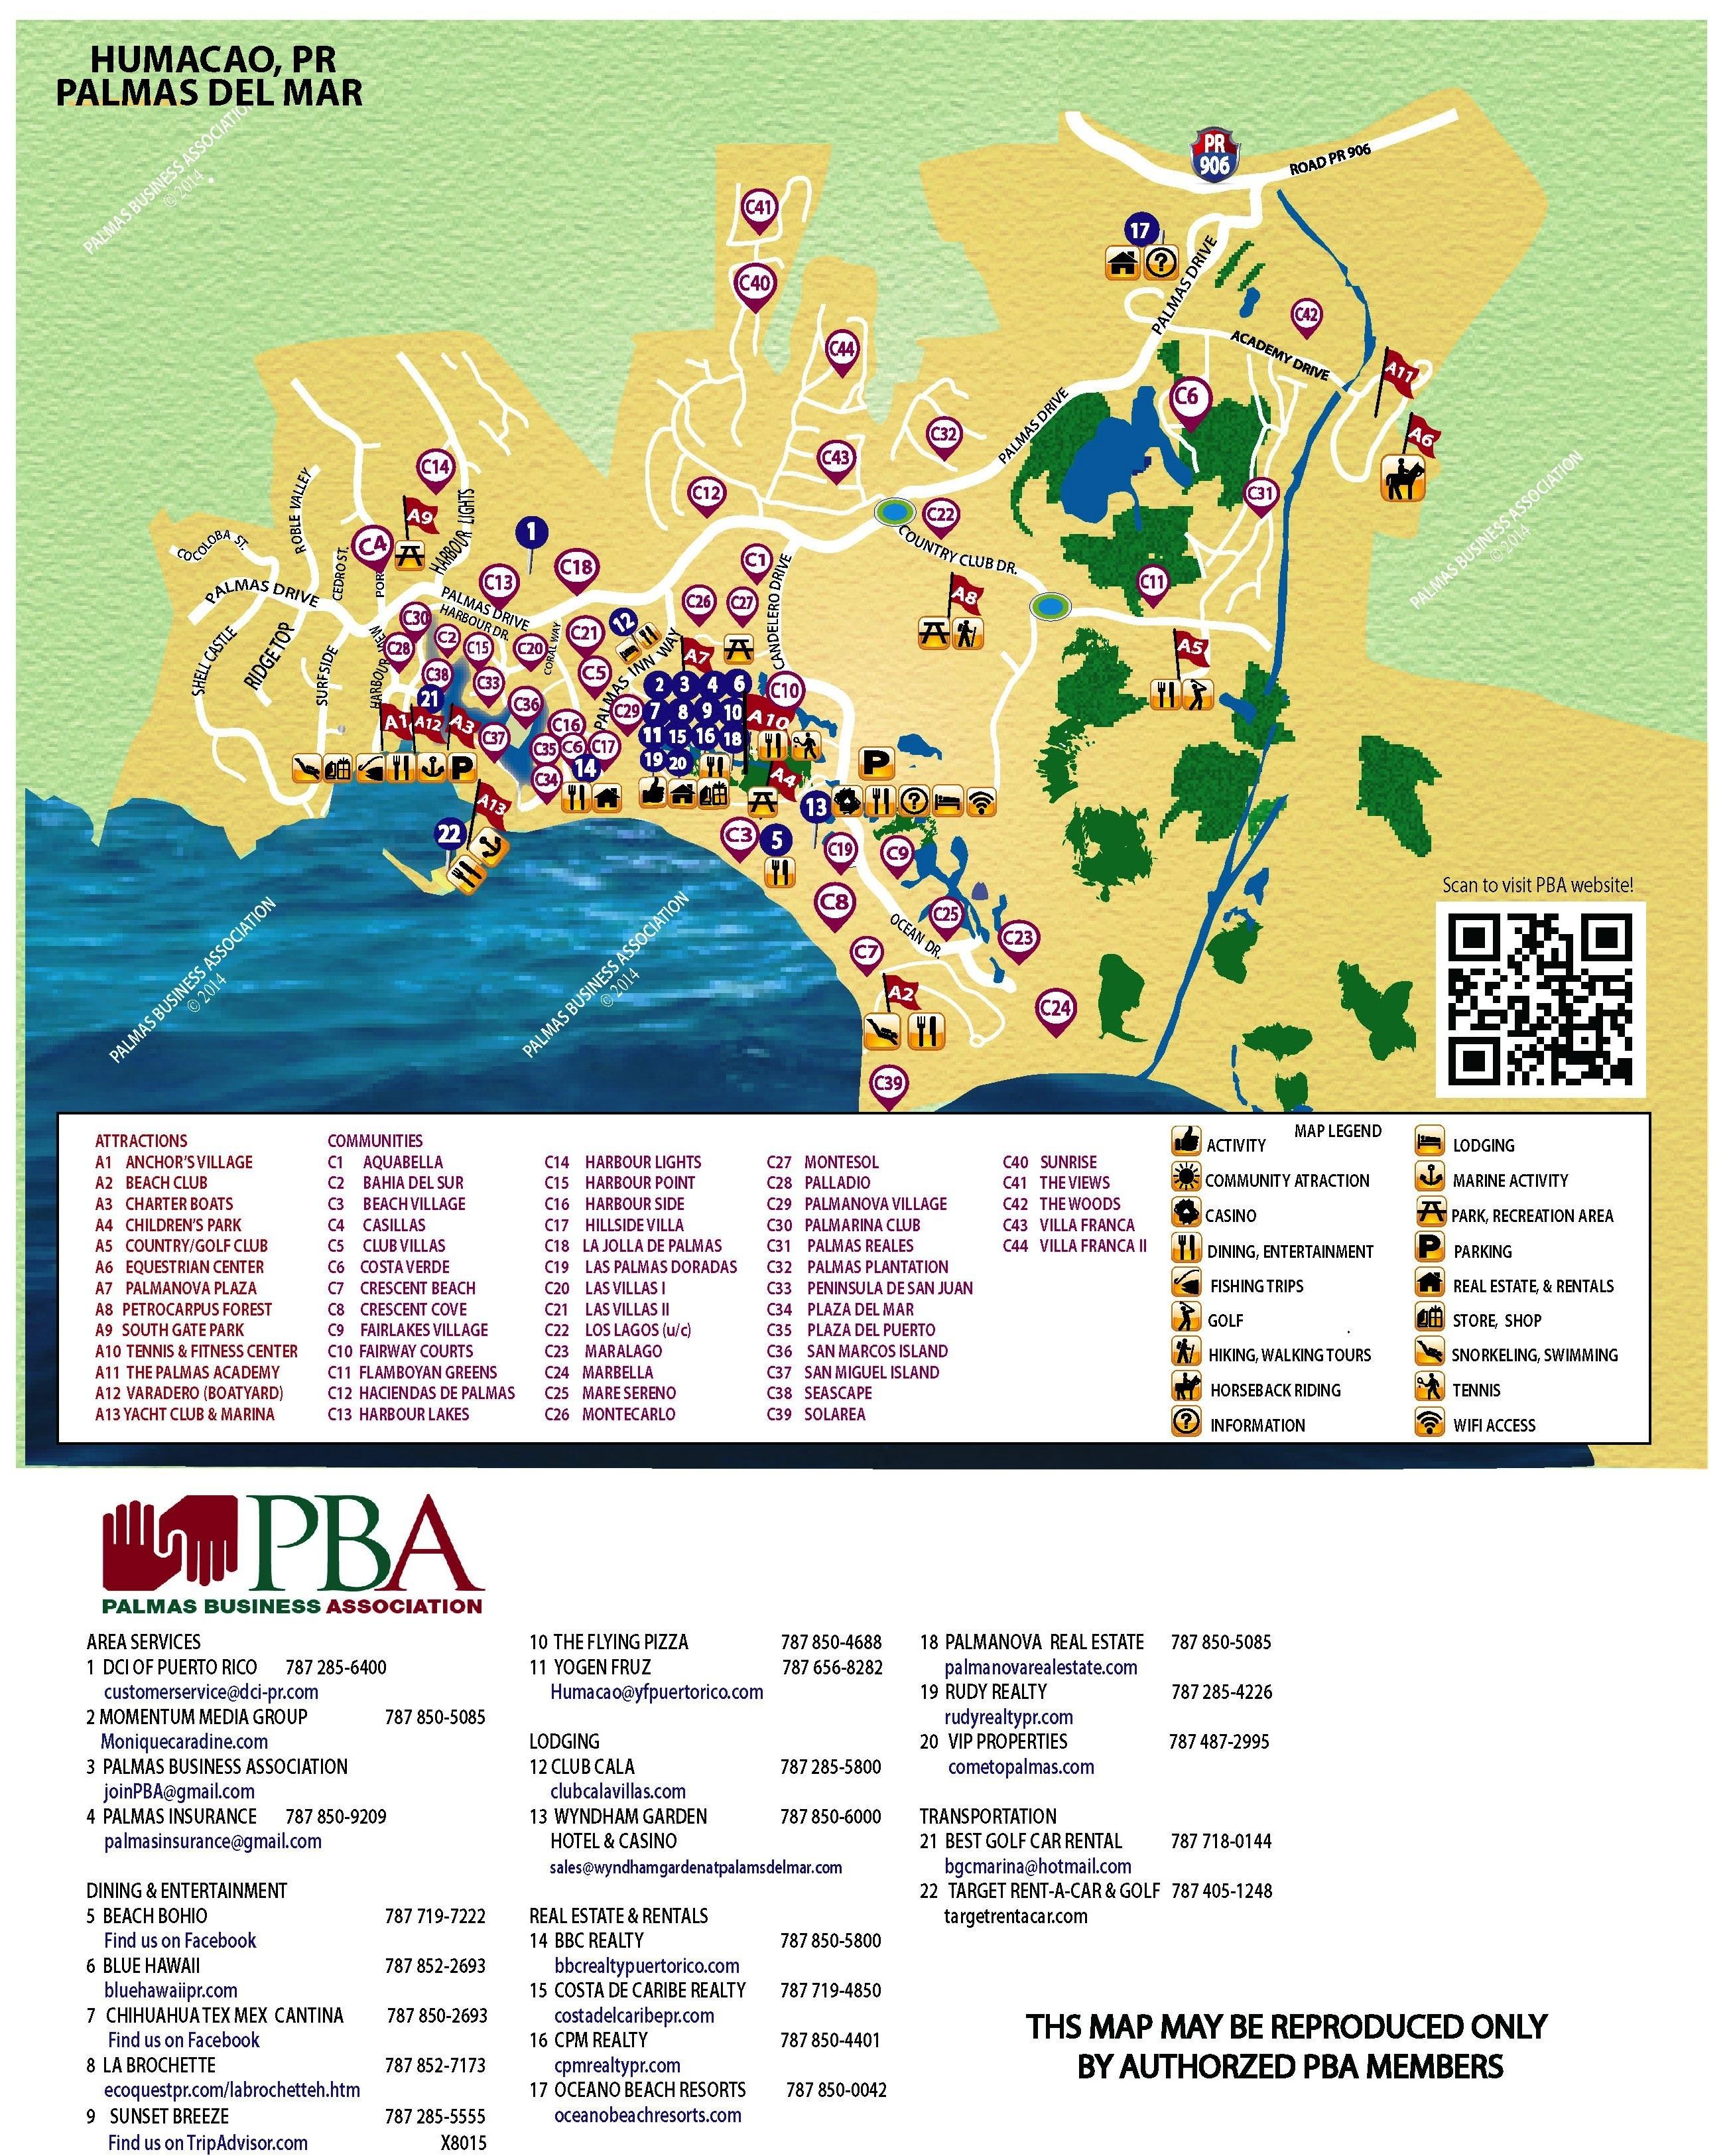 MAP Palmas del Mar, Puerto Rico - produced by the Palmas Business Association